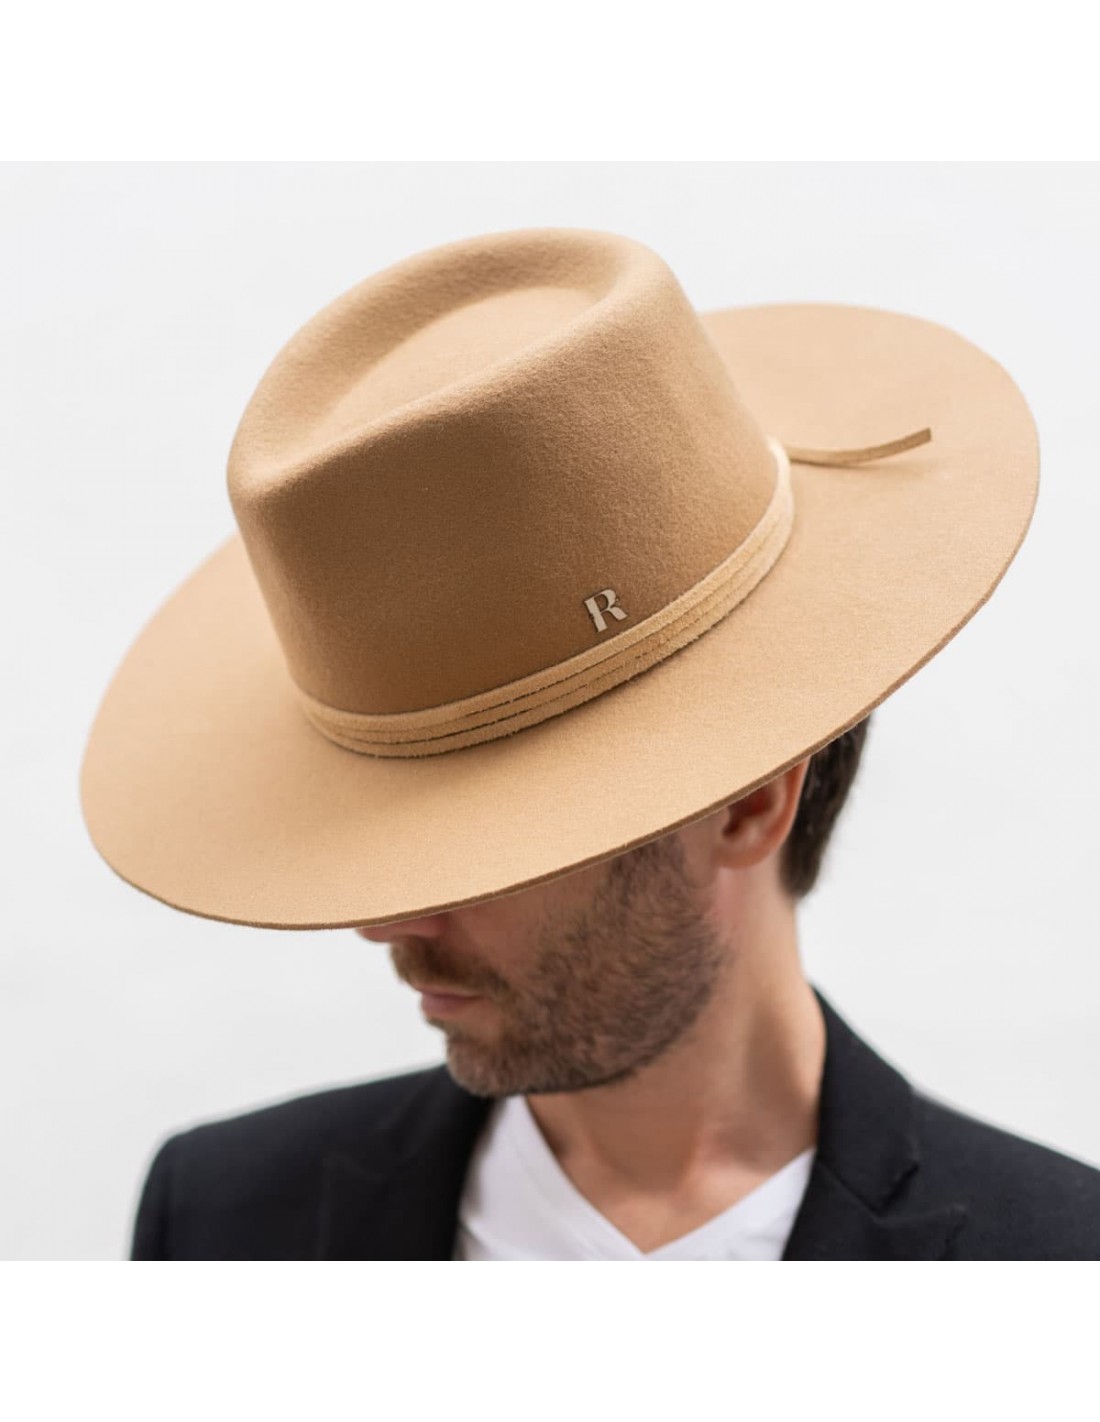 Caramel Wool Felt Fedora Hat for Men - Crown and Brim rigid - Raceu Hats